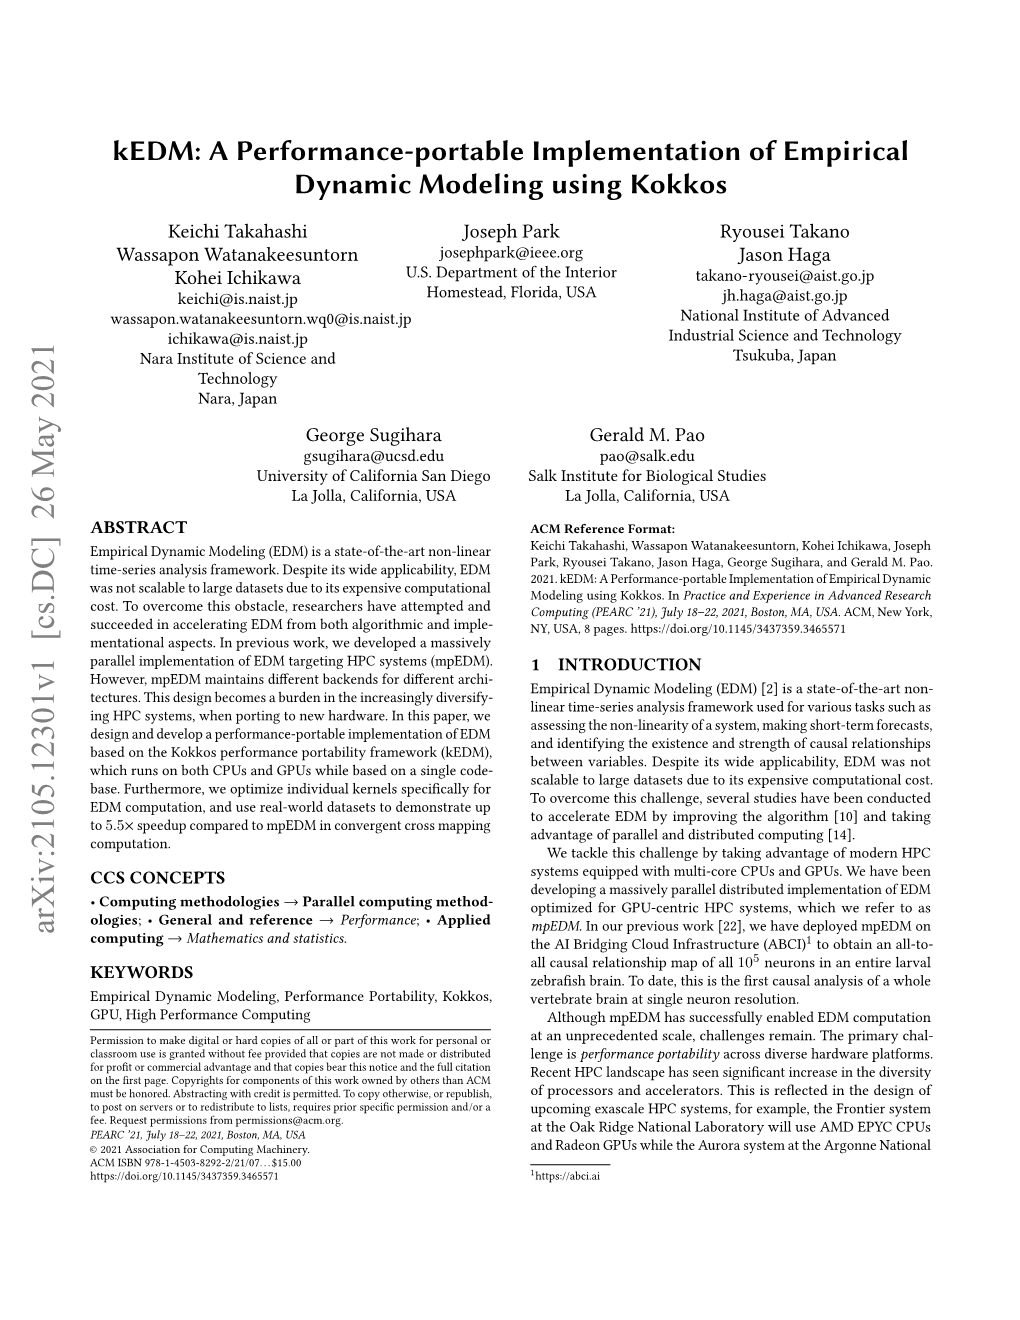 A Performance-Portable Implementation of Empirical Dynamic Modeling Using Kokkos